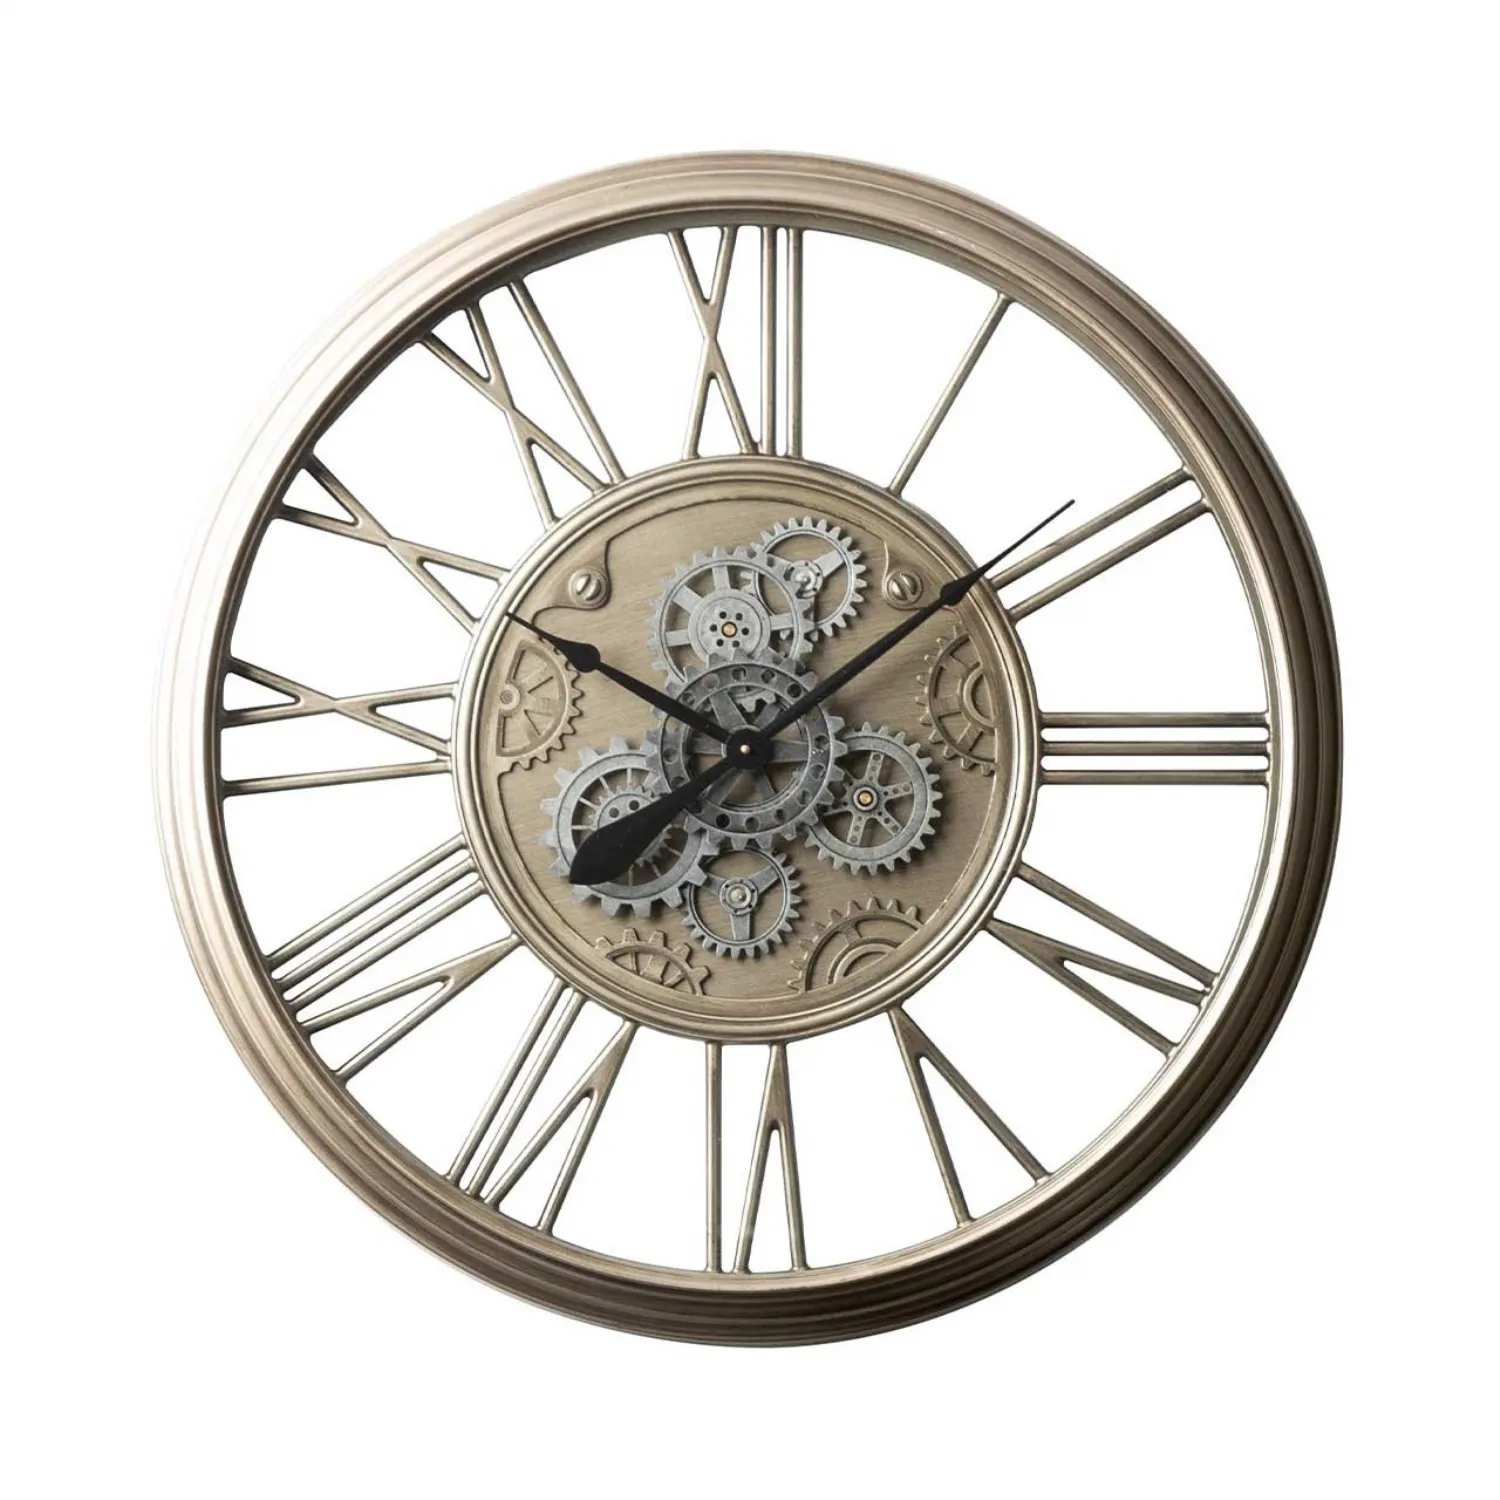 85cm Silver Gear Wall Clock